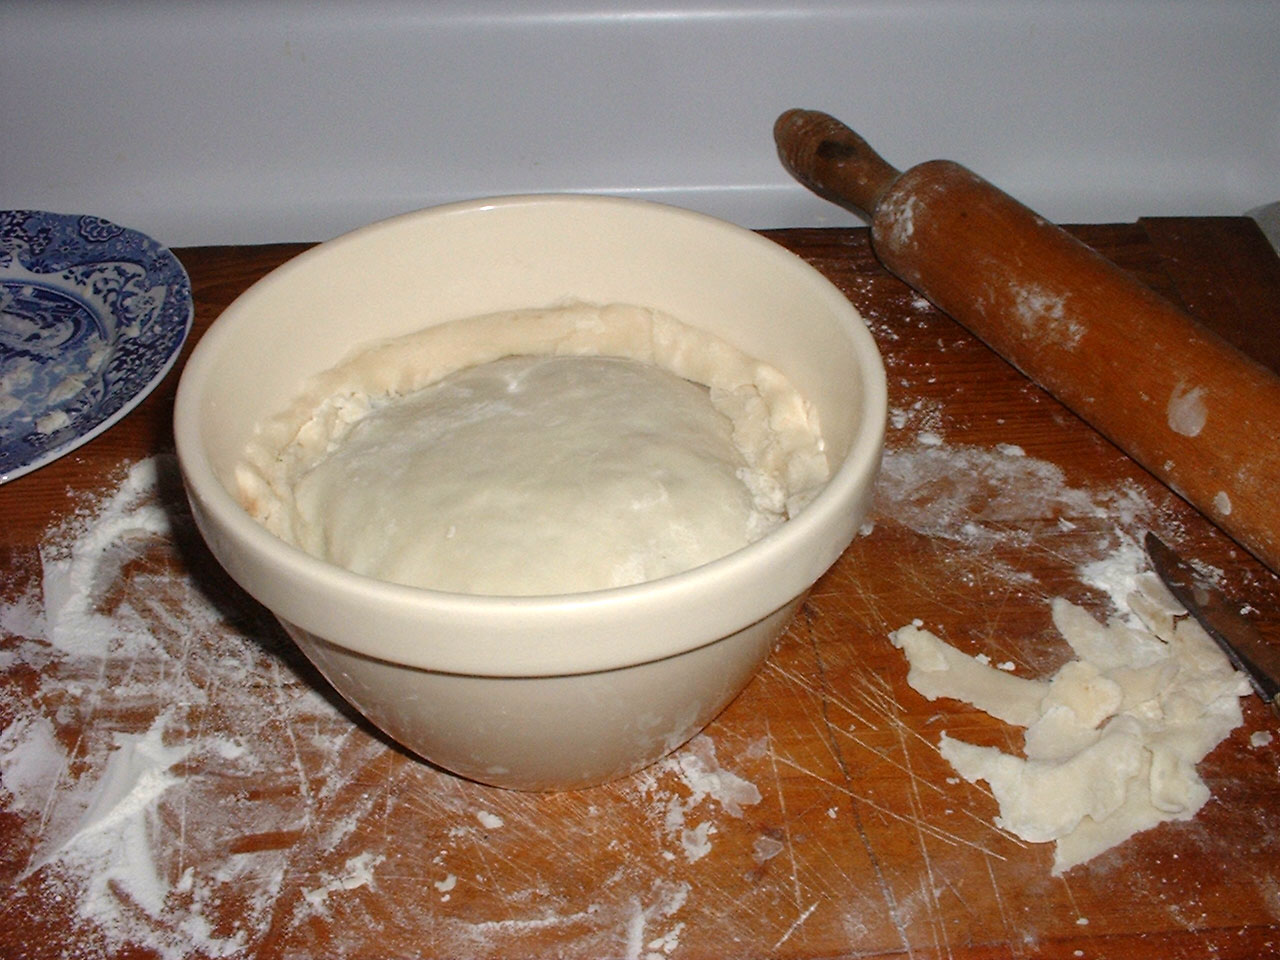 Putting top crust on